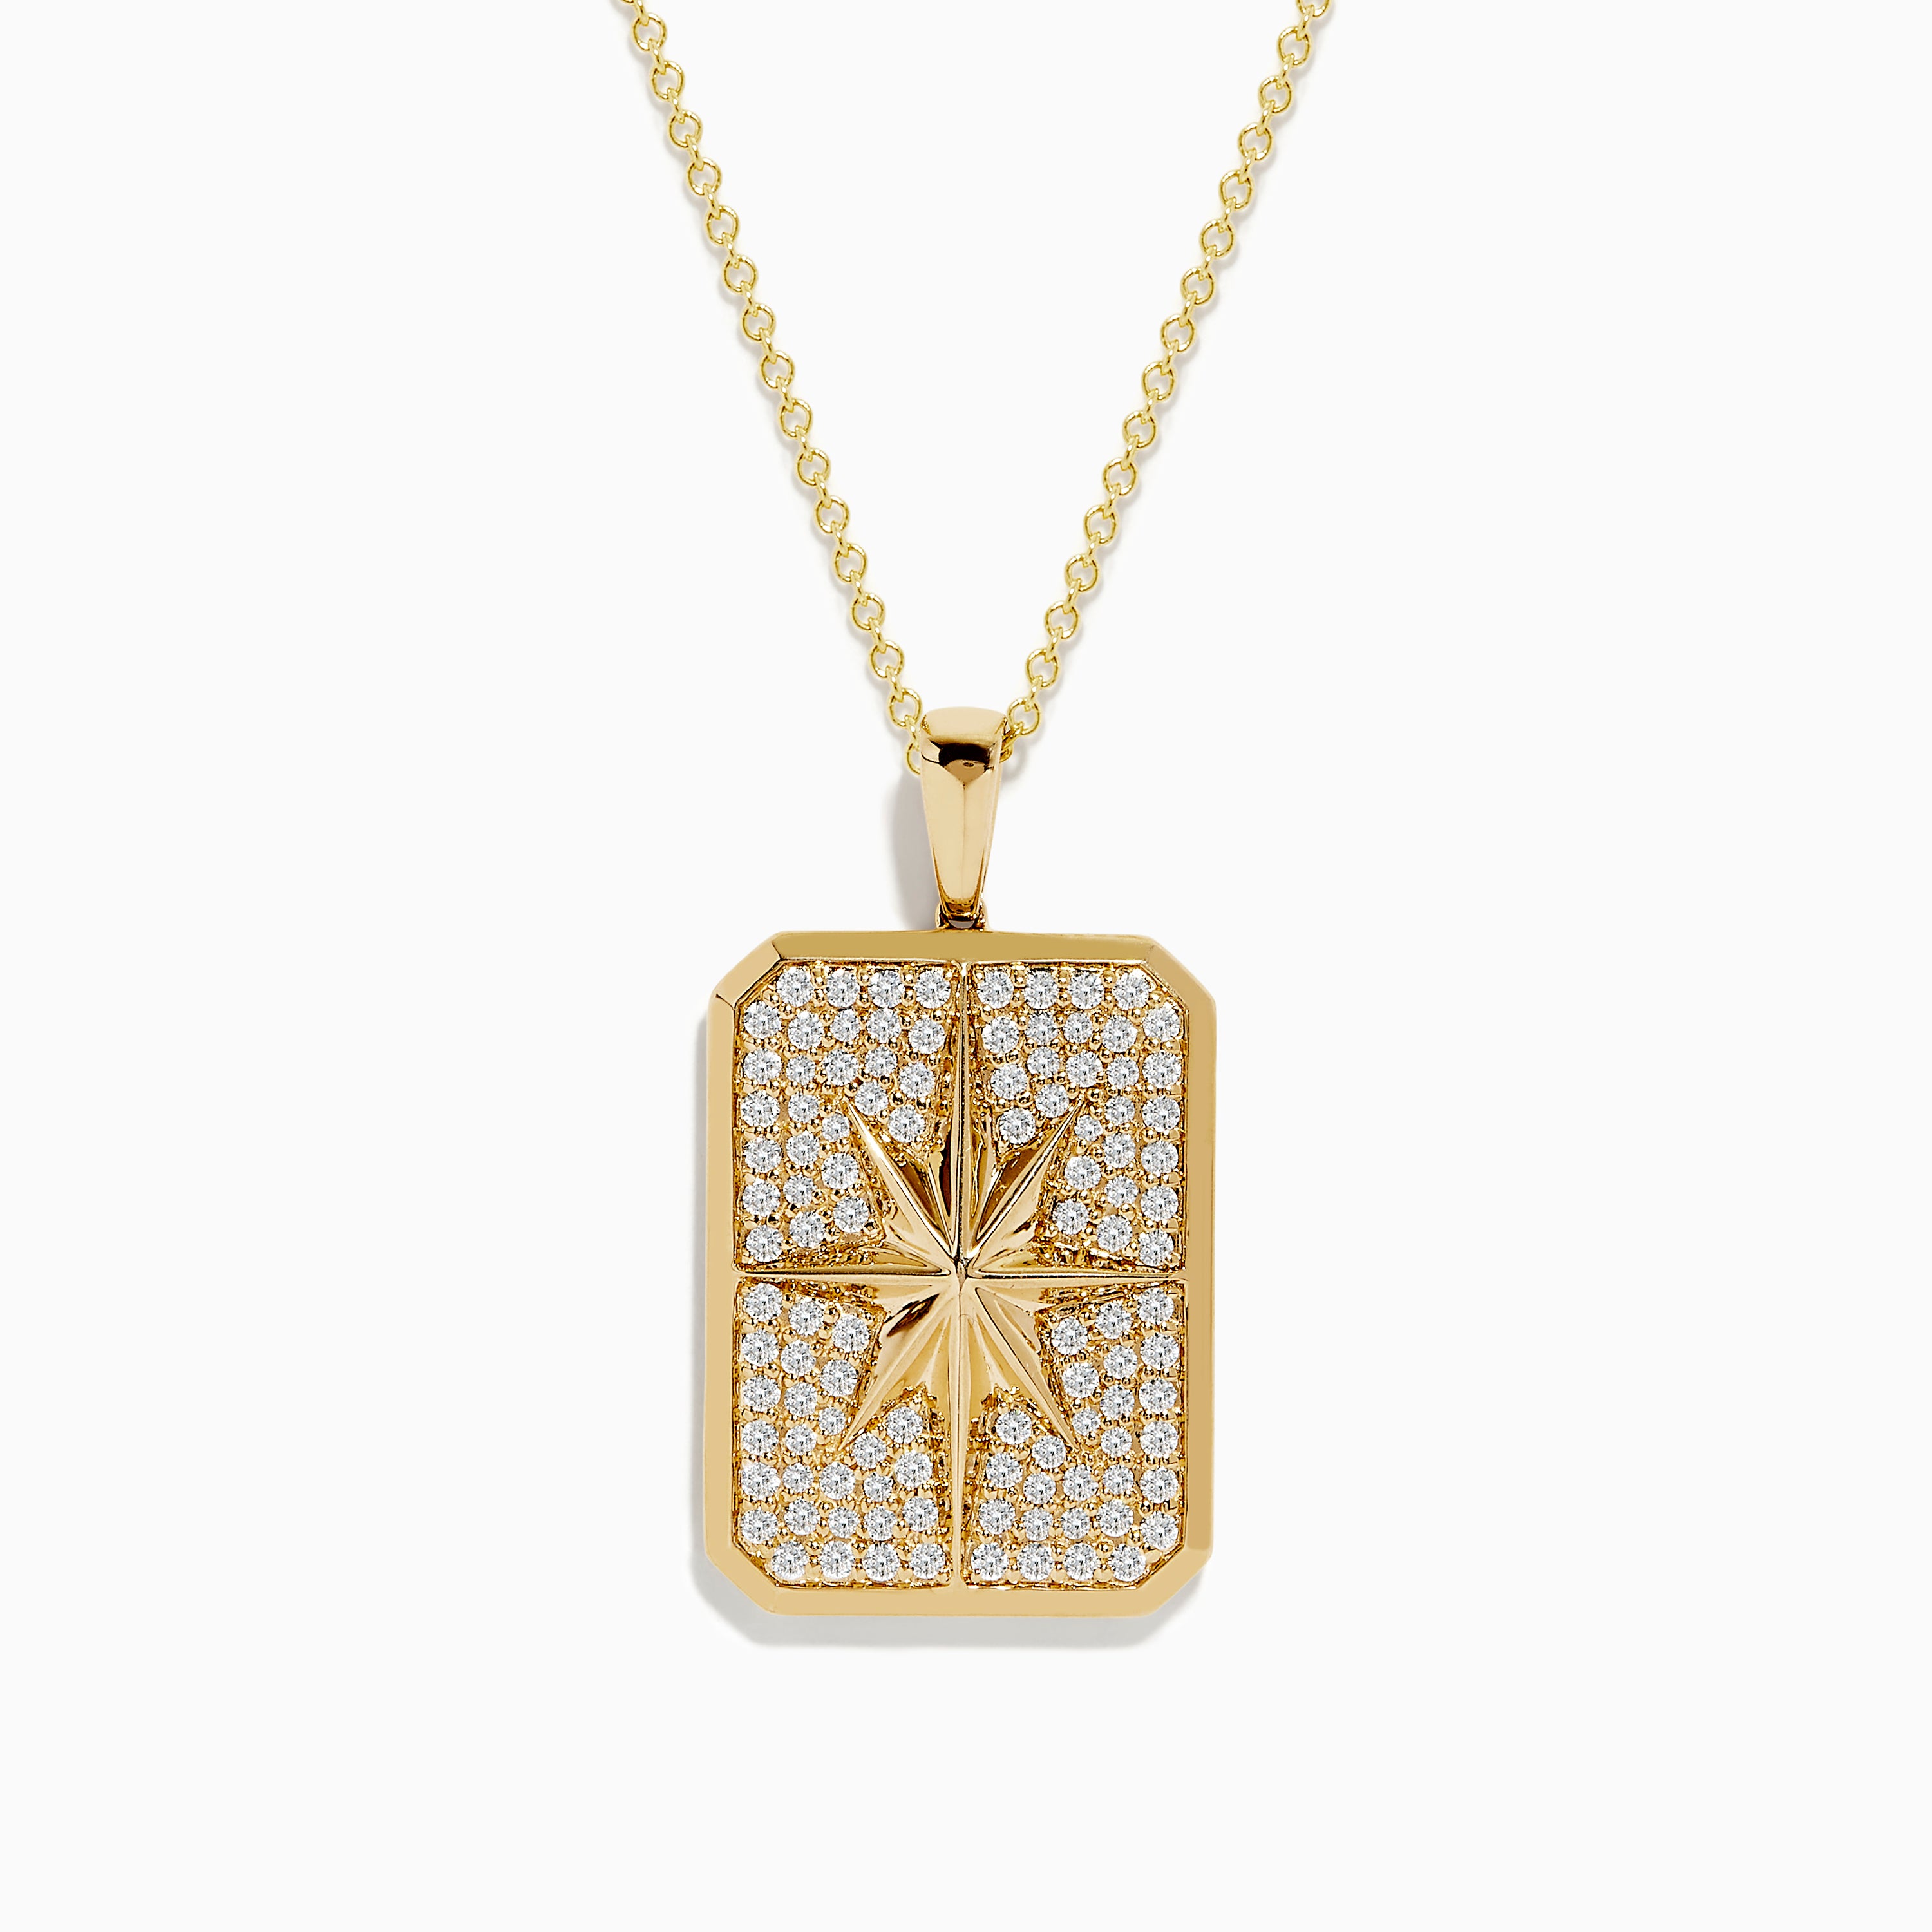 Effy D'oro 14K Yellow Gold Diamond pendant